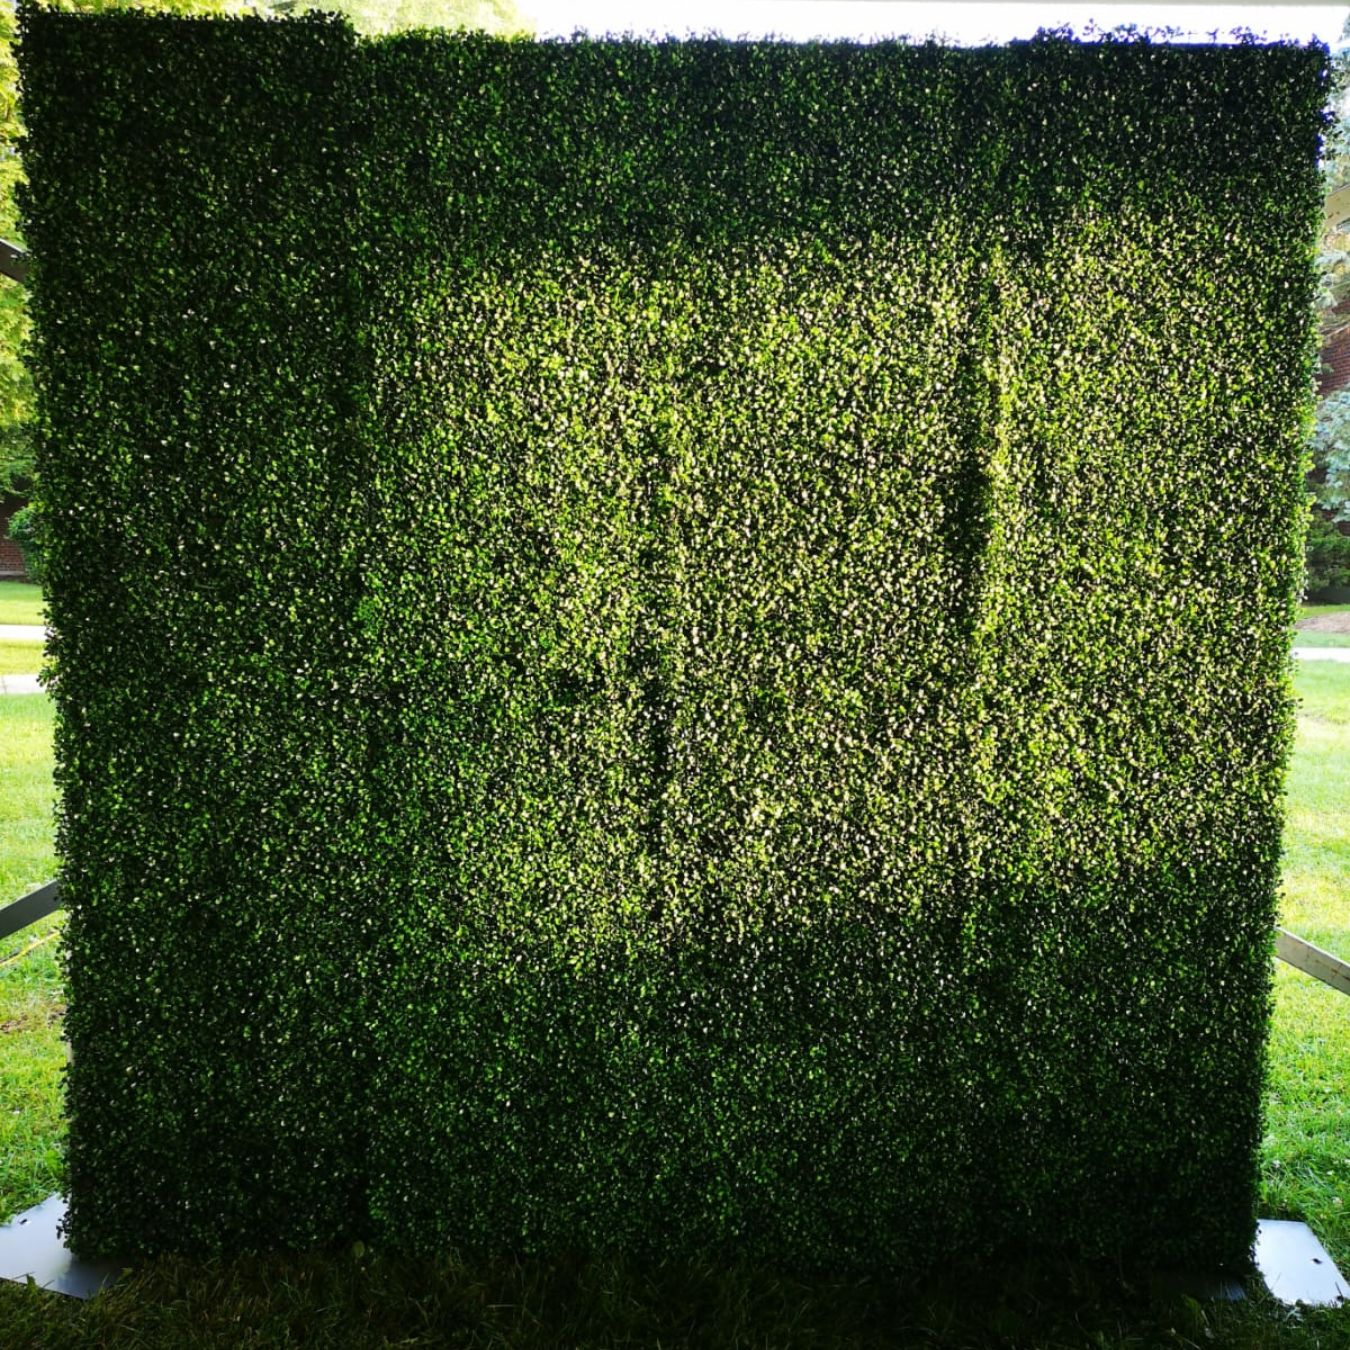  Green Boxwood Flower Wall Backdrop